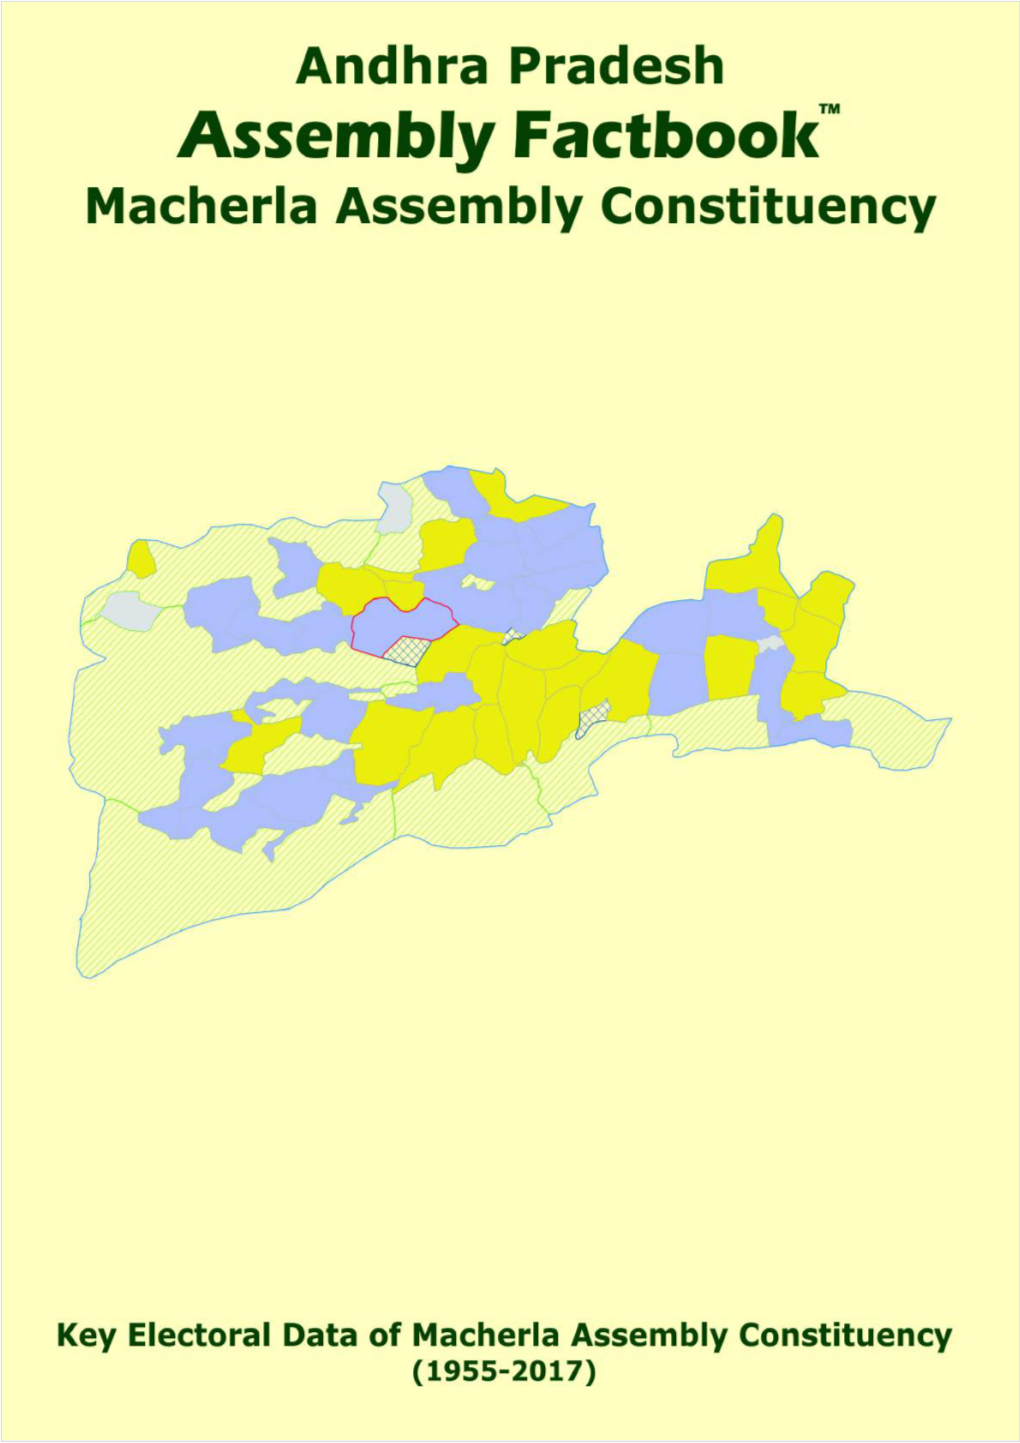 Macherla Assembly Andhra Pradesh Factbook